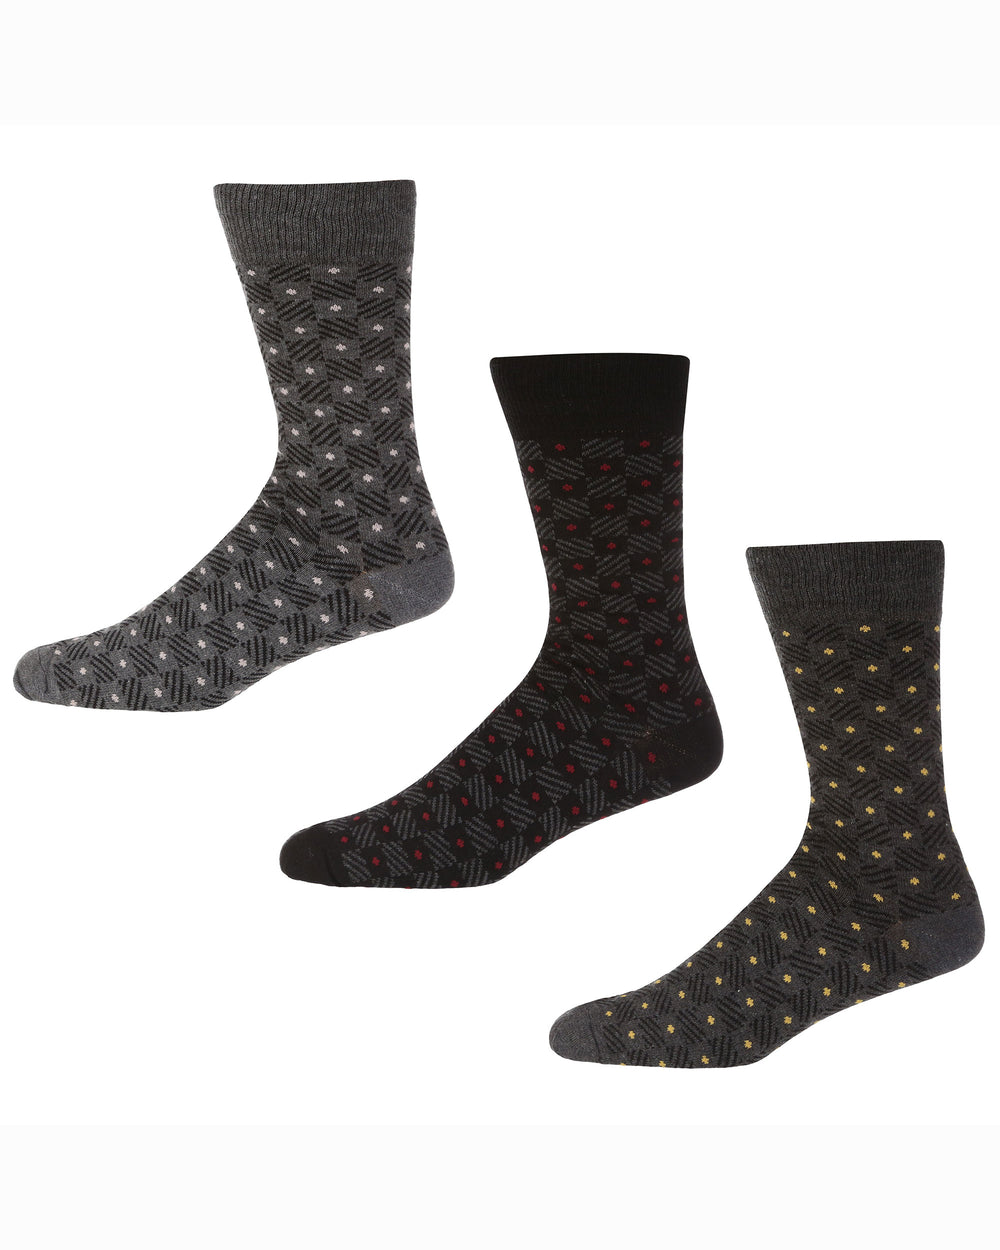 North Light Men's 3-Pack Eco-Friendly Socks - Black/Grey Check